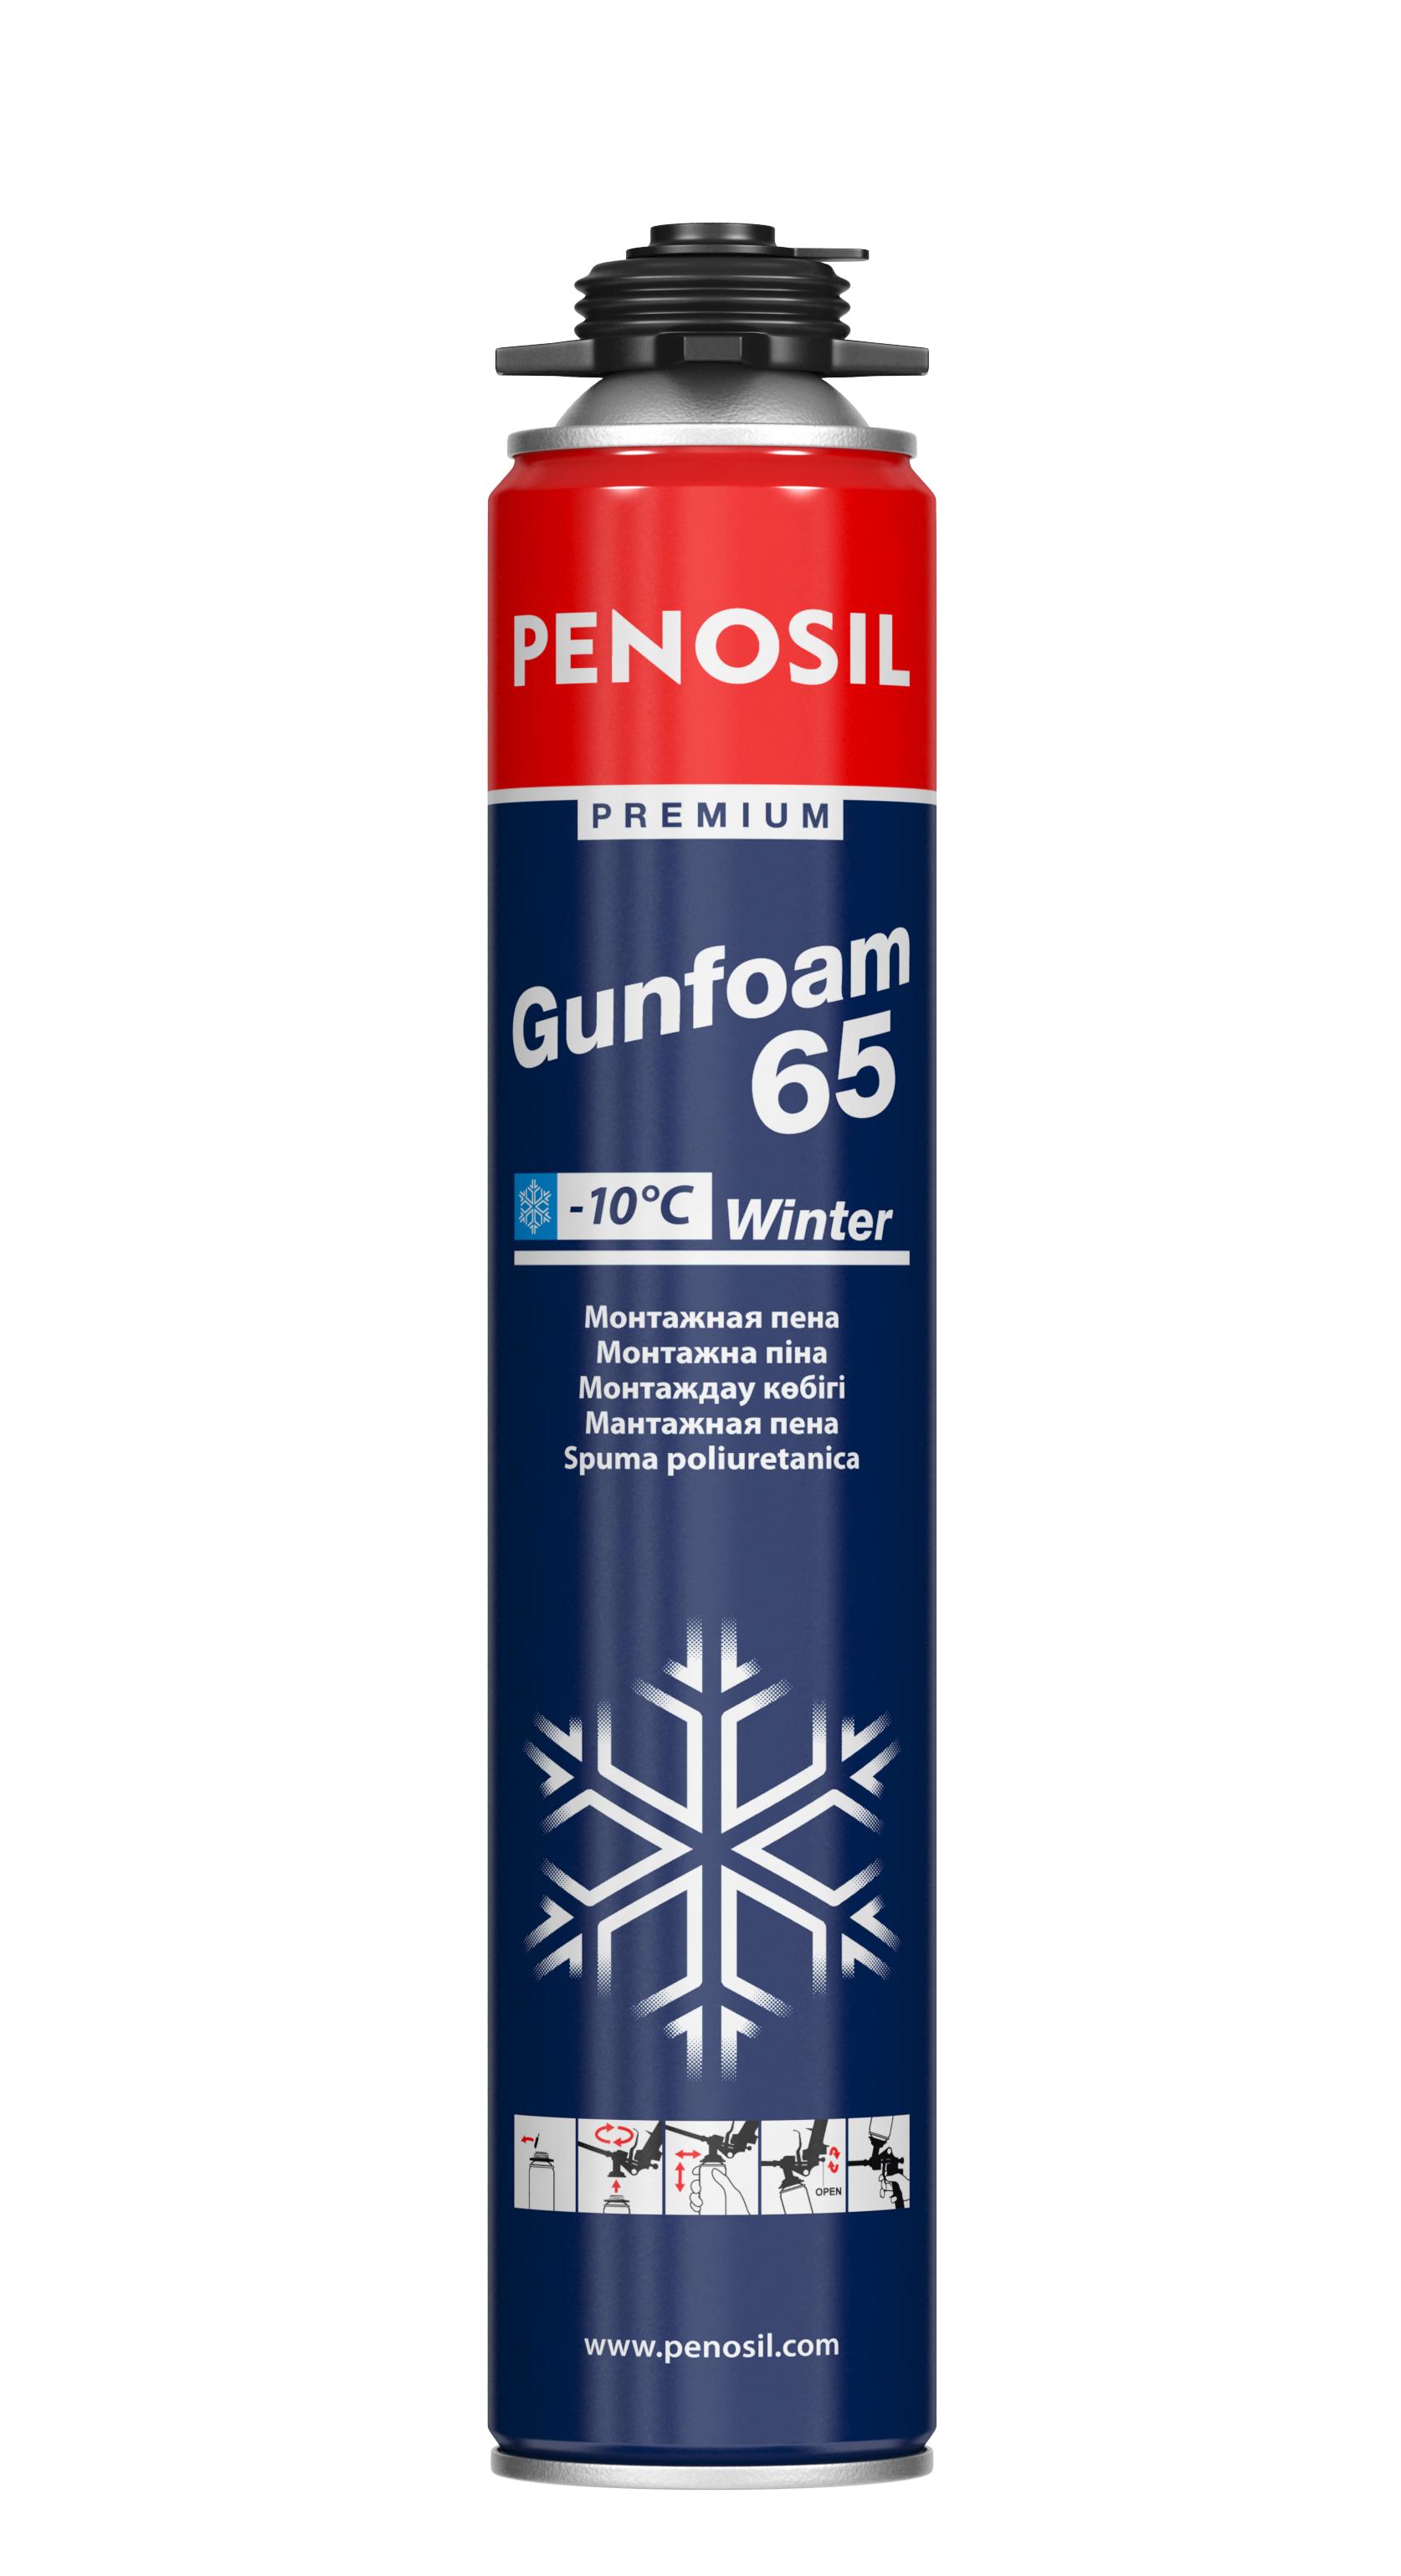 Пена монтажная проф. PENOSIL Premium Gunfoam 65 зима (-10°С), 870 ml (12).